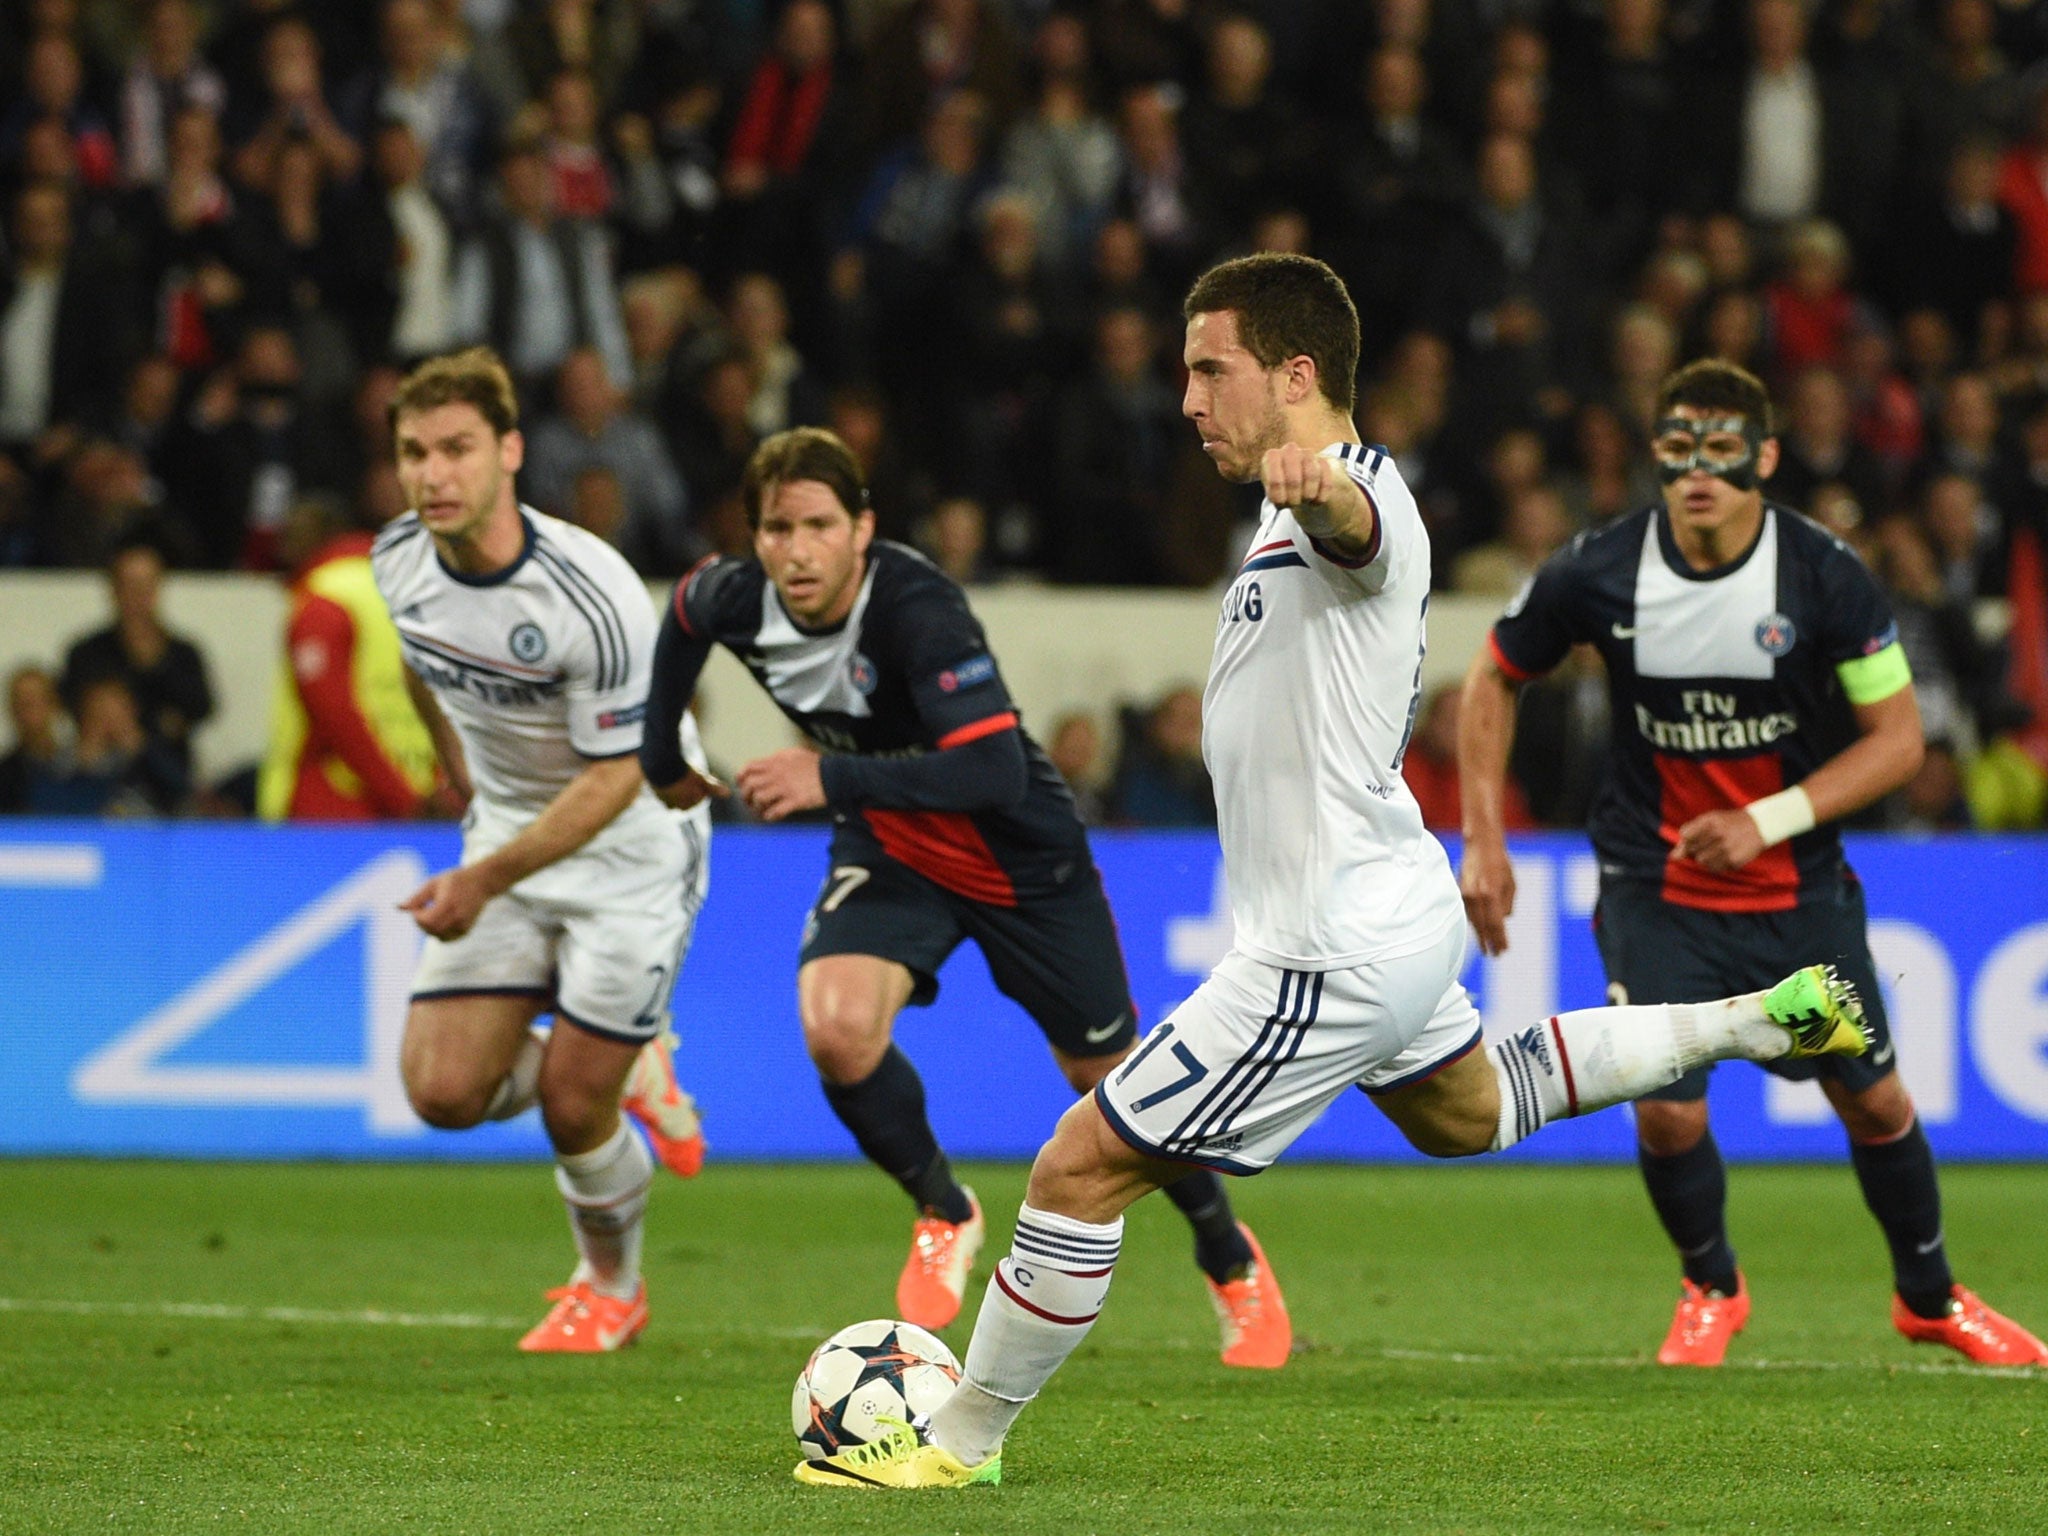 Eden Hazard in action against his possible future club